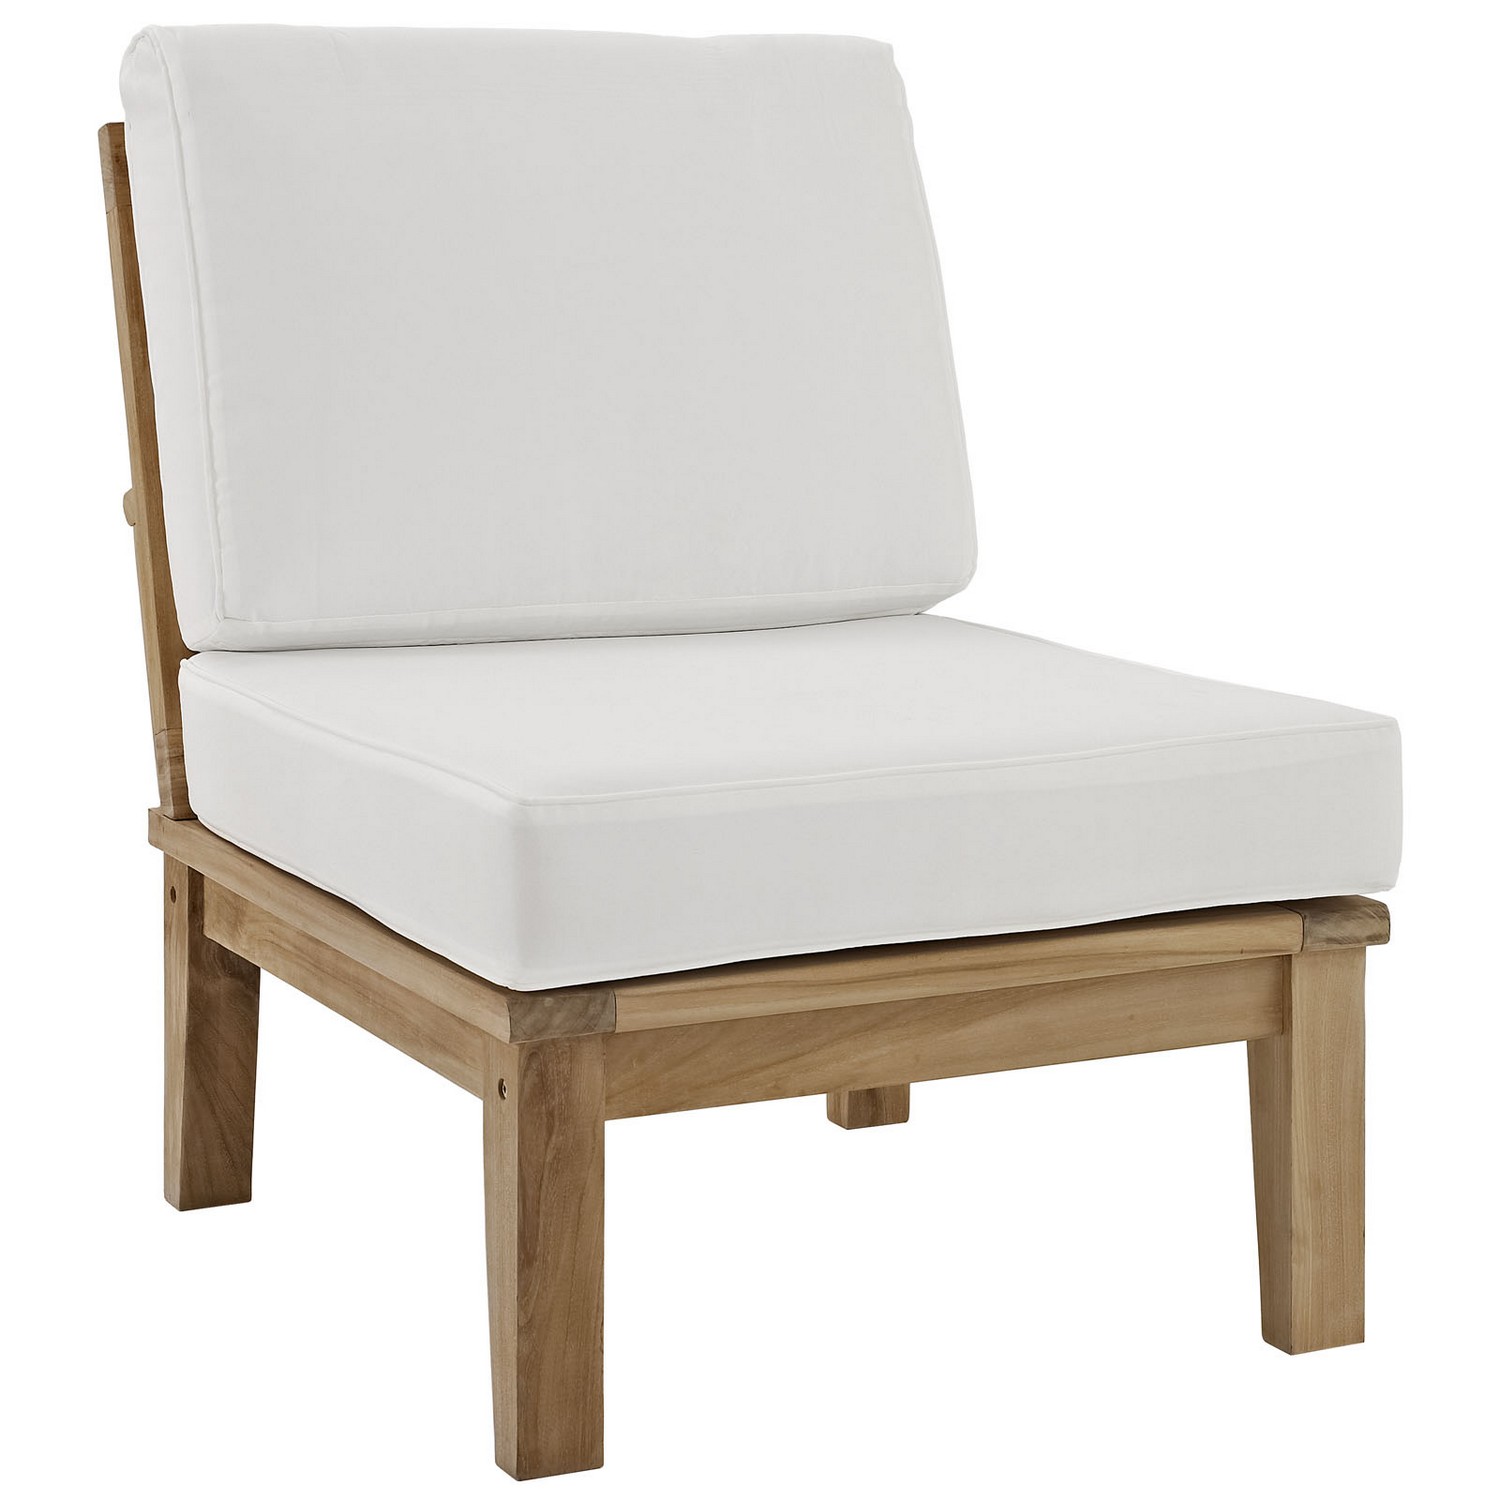 Modway Marina 9 Piece Outdoor Patio Teak Sofa Set - Natural White